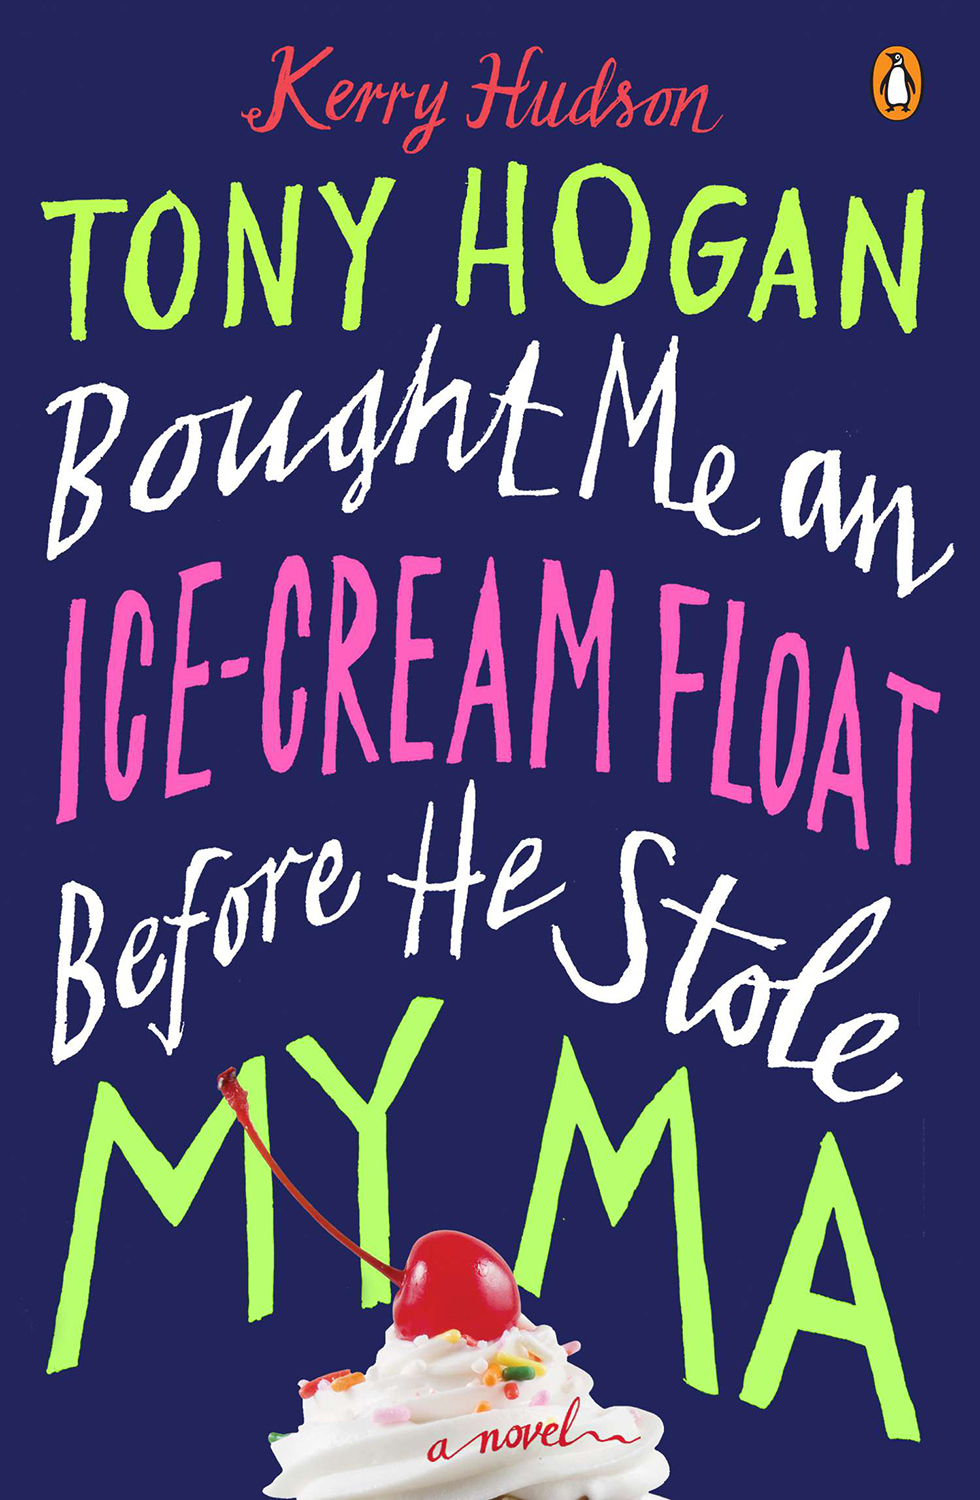 Tony Hogan bought me an ice-cream float before he stole my Ma